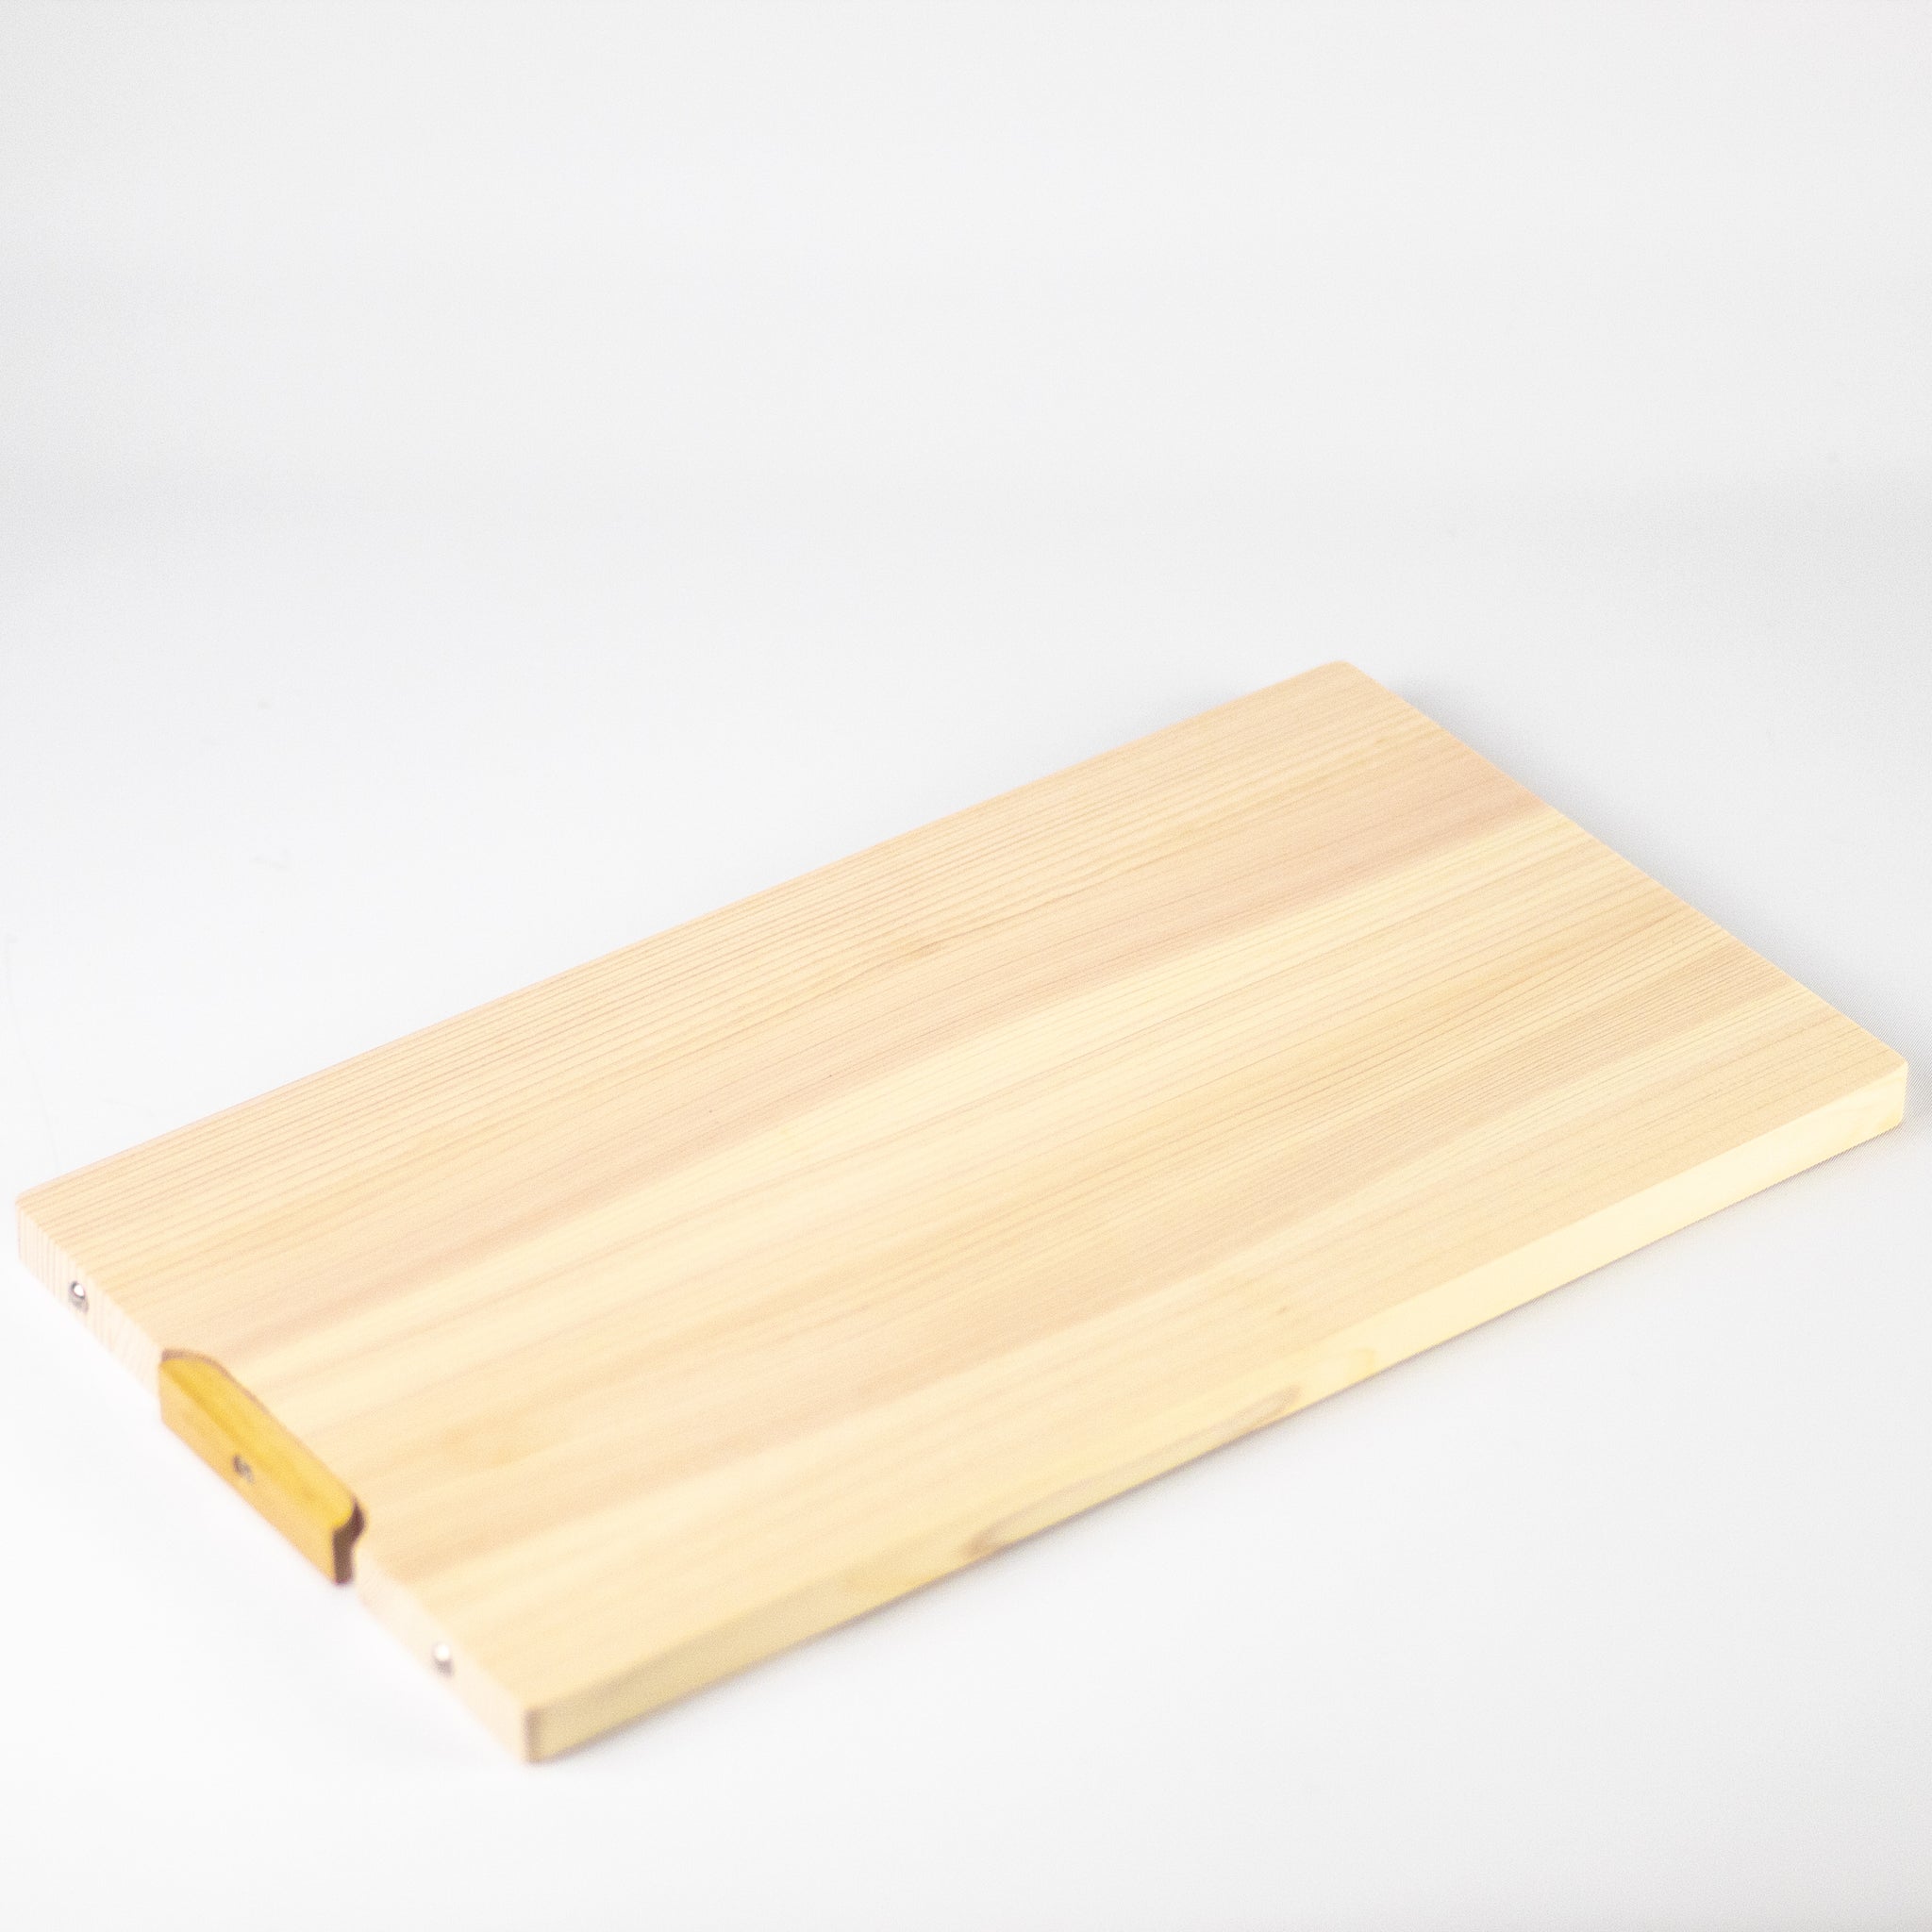 Cutting Board Options - Hardwood Lumber Company